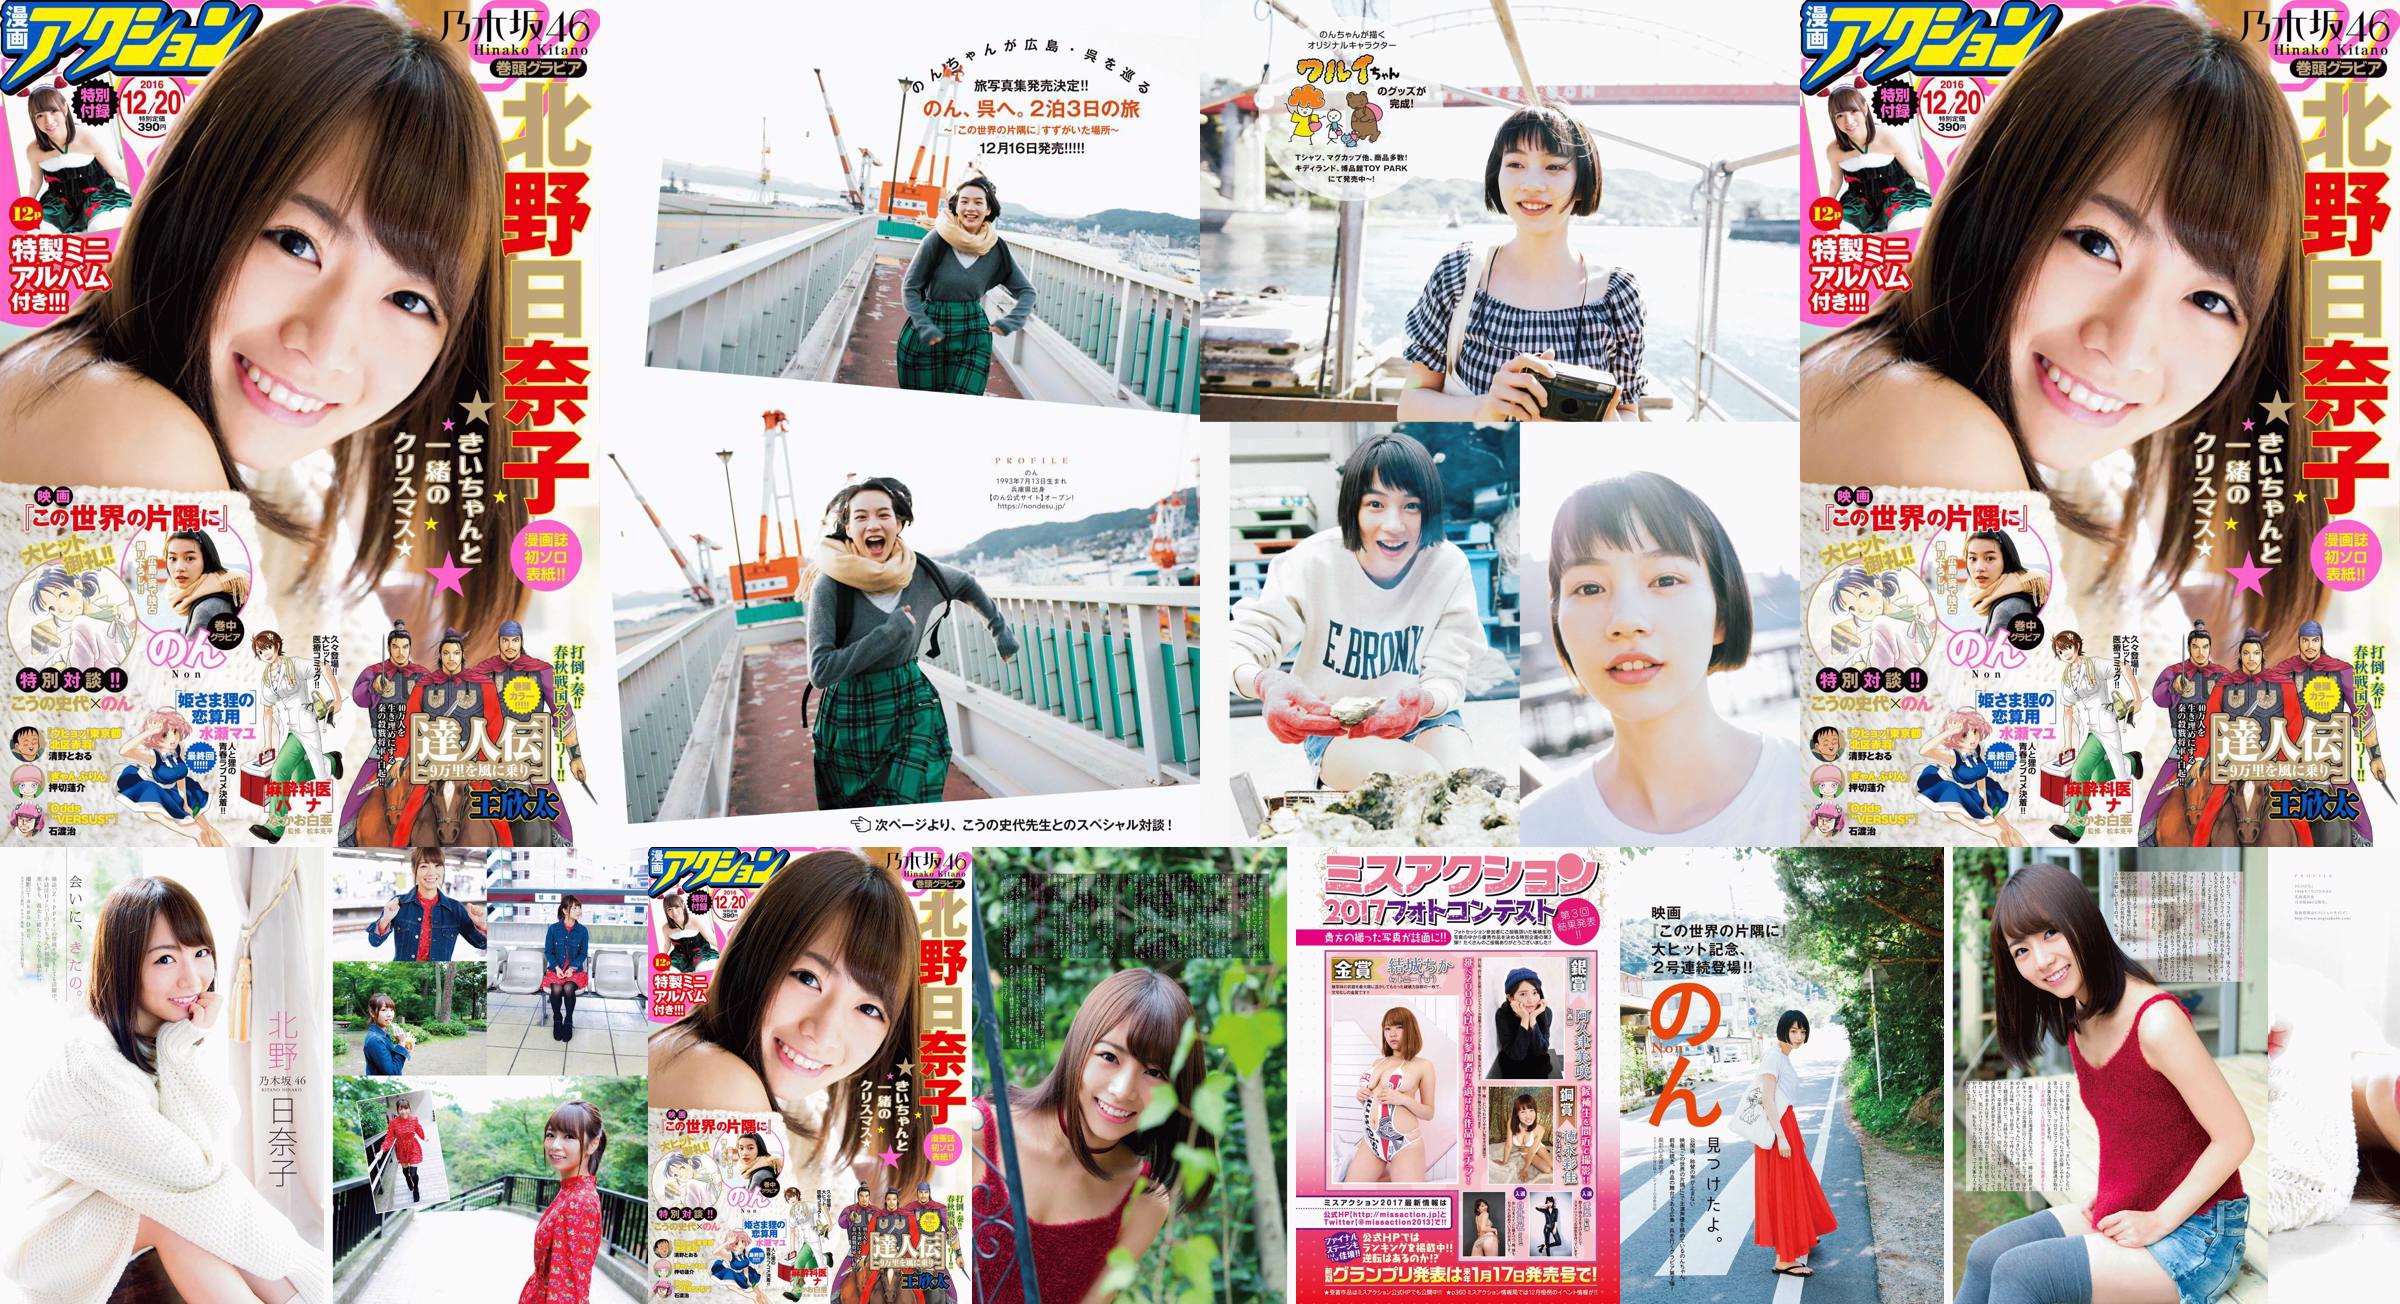 [Manga Action] Kitano Hinako のん 2016 No.24 Photo Magazine No.85694c Strona 1